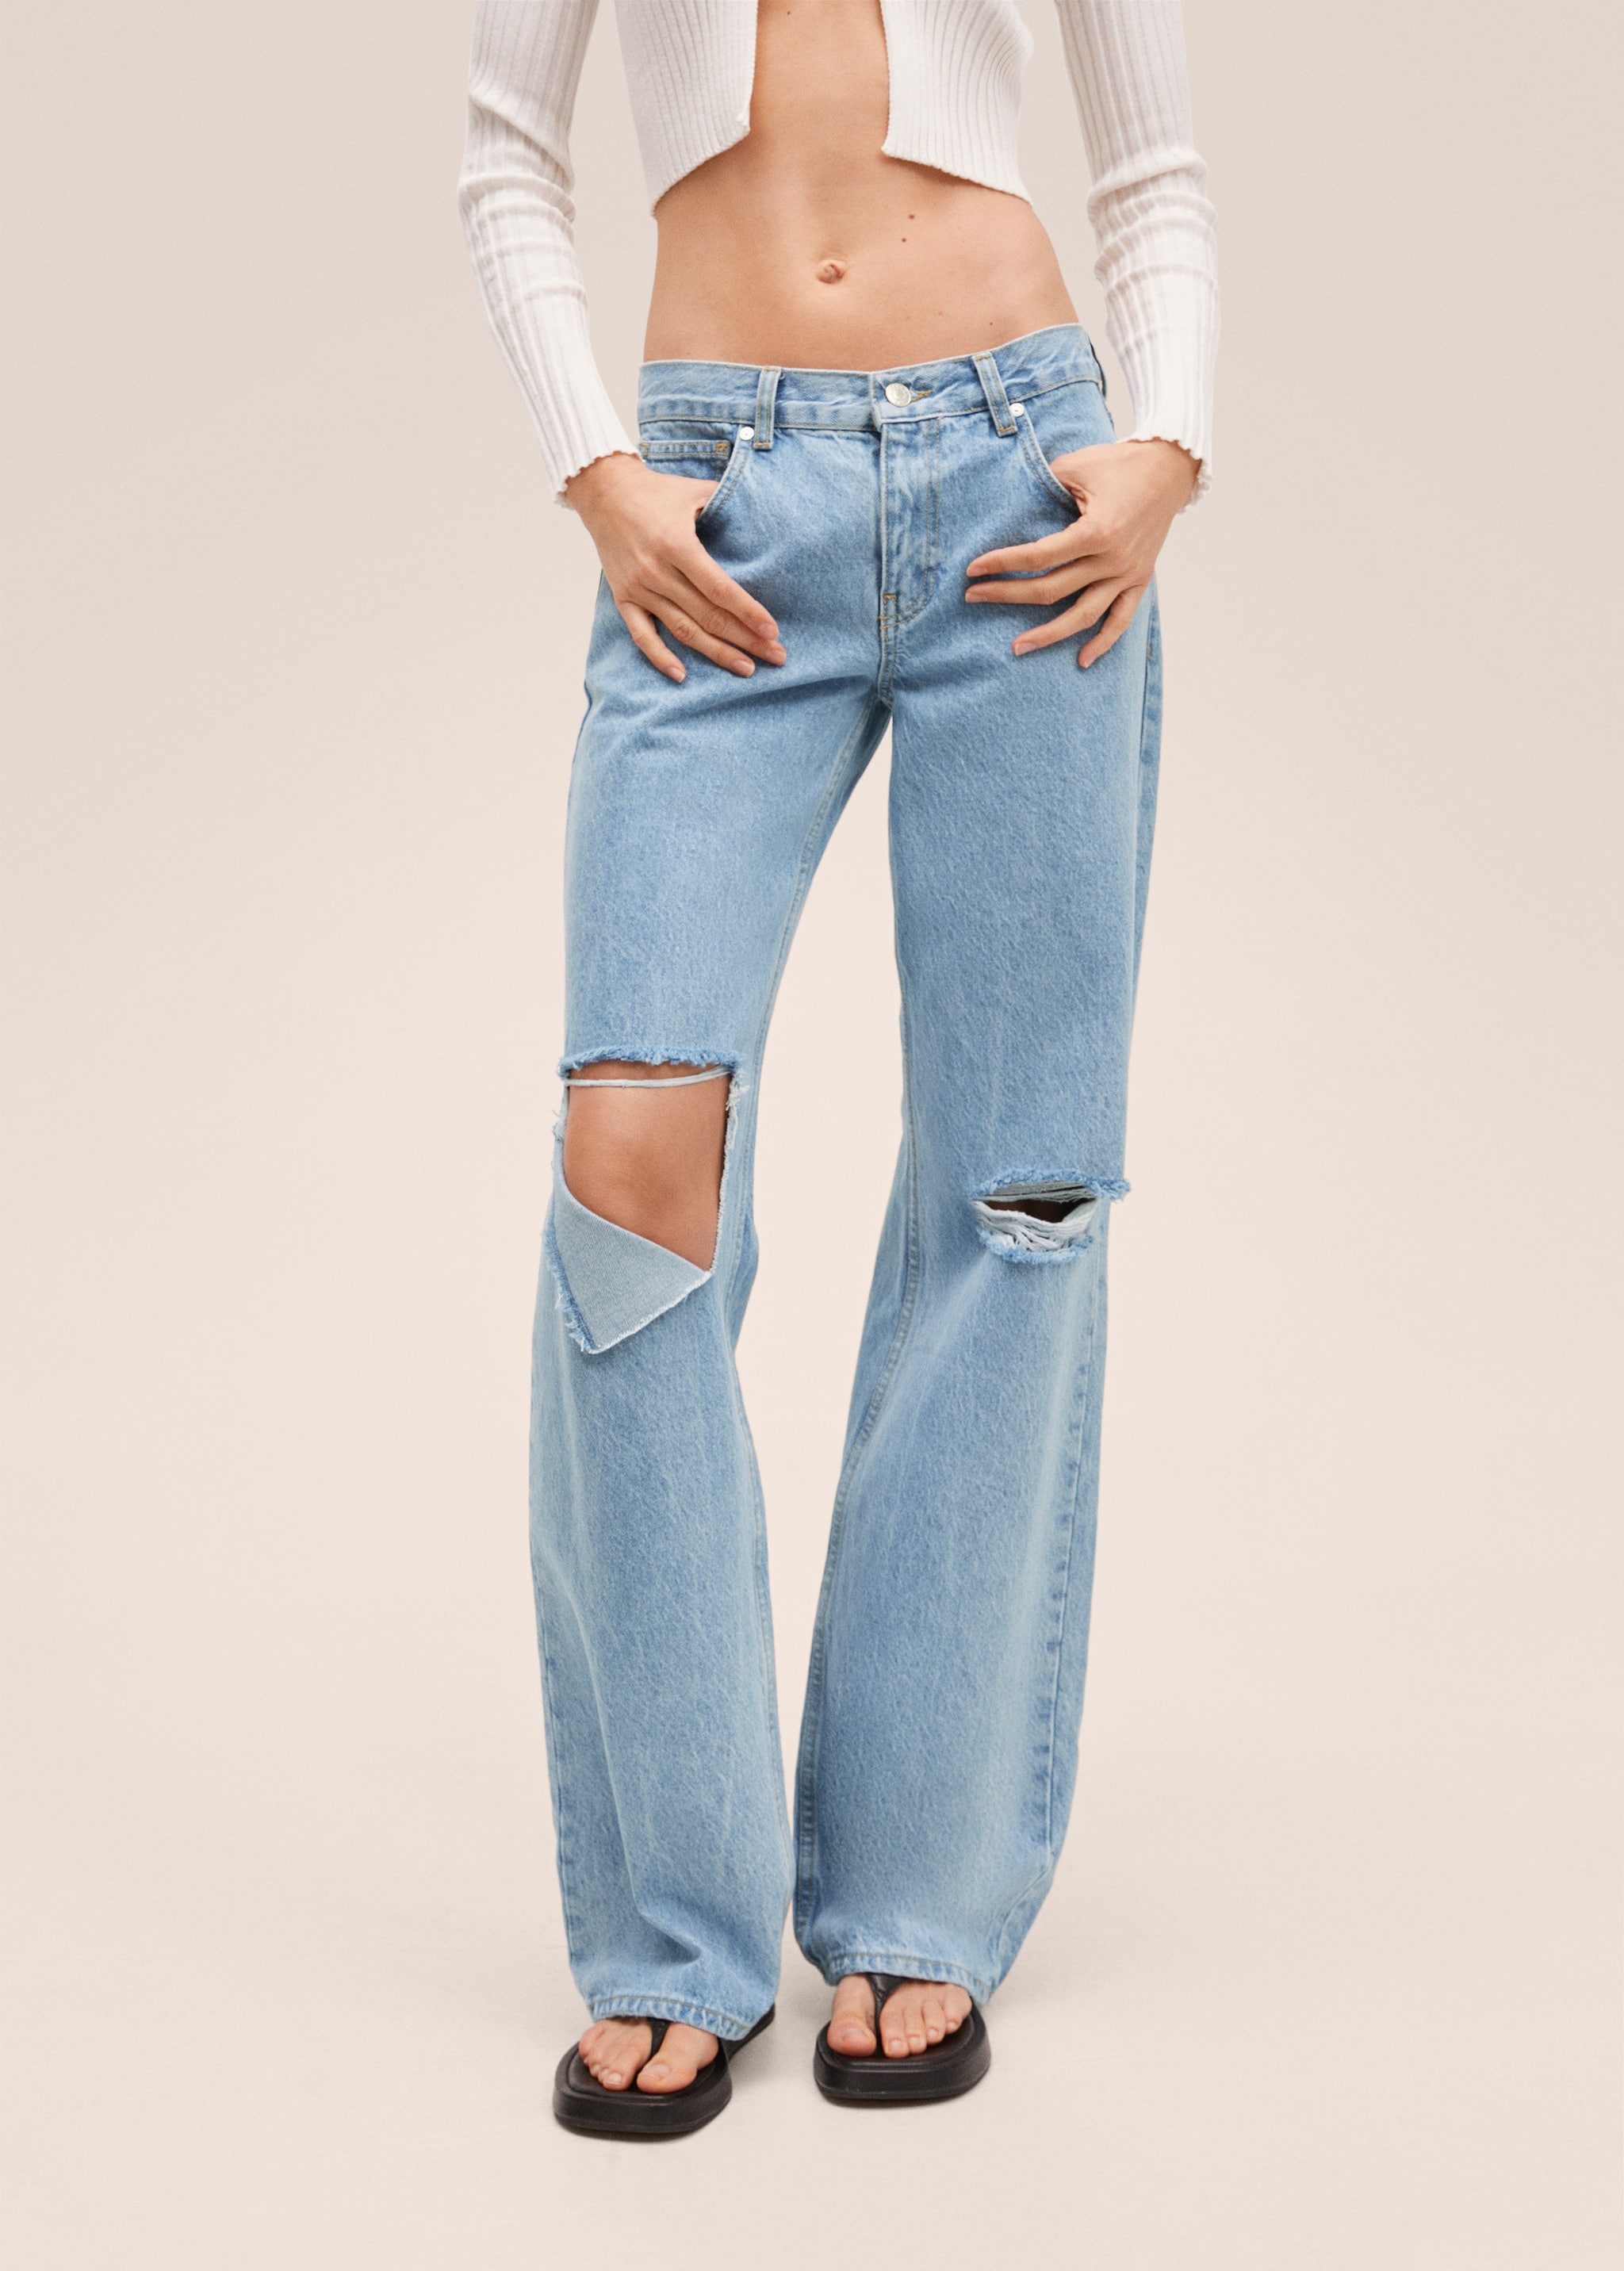 Low-rise wideleg jeans - Medium plane